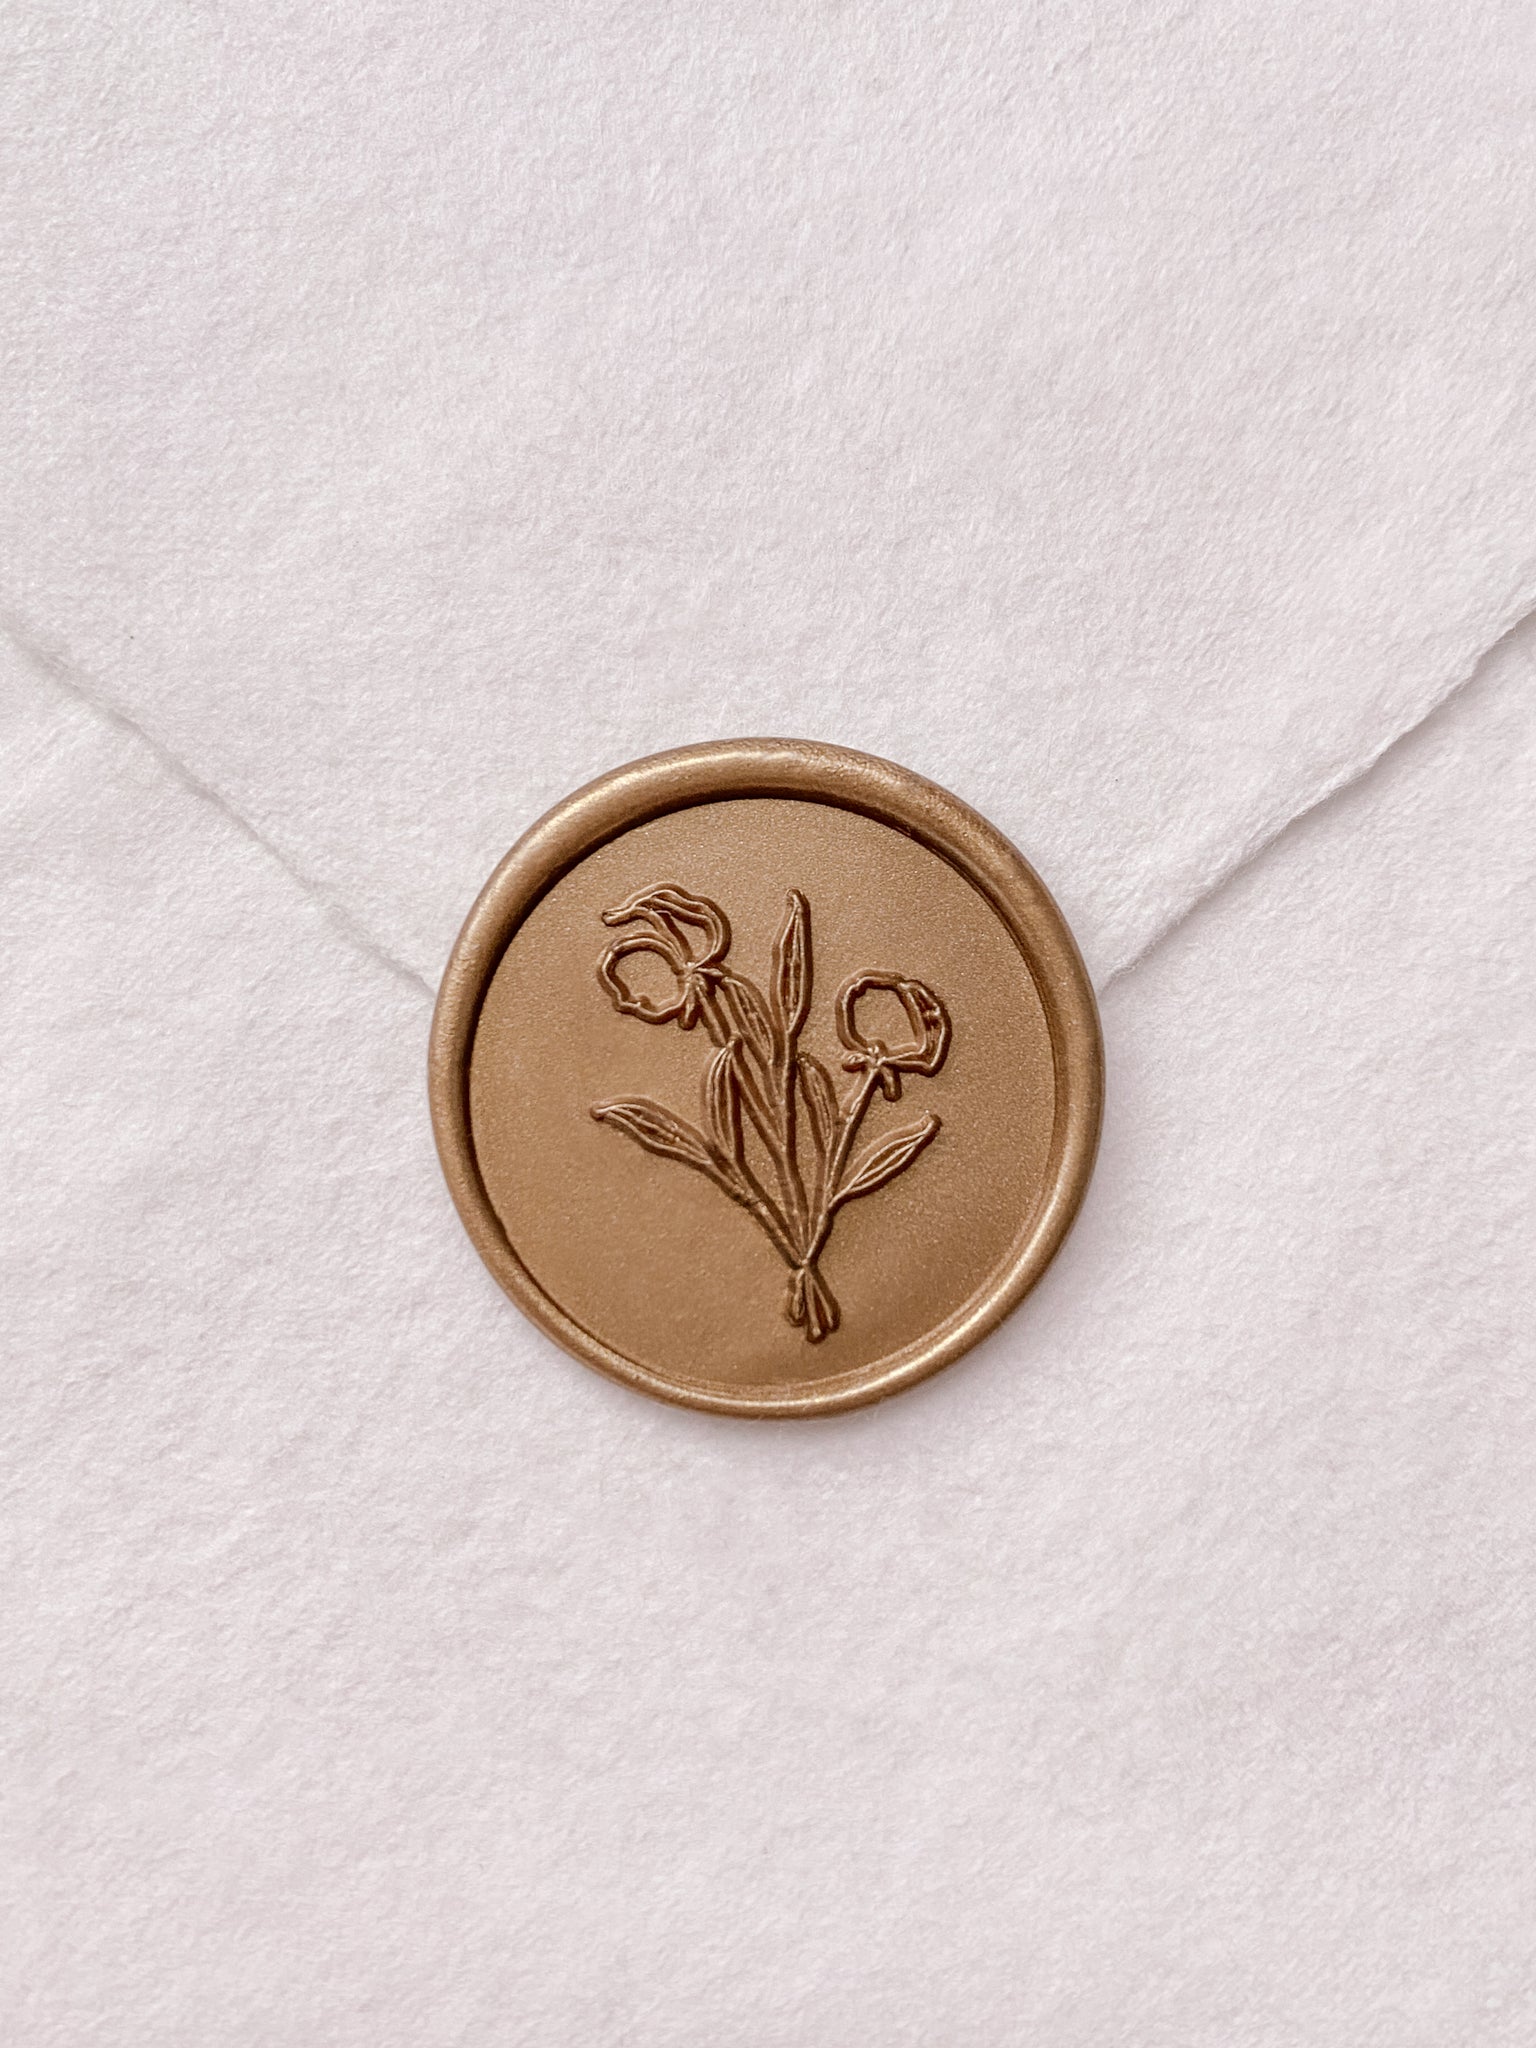 Flower bouquet wax seal in gold on handmade paper envelope